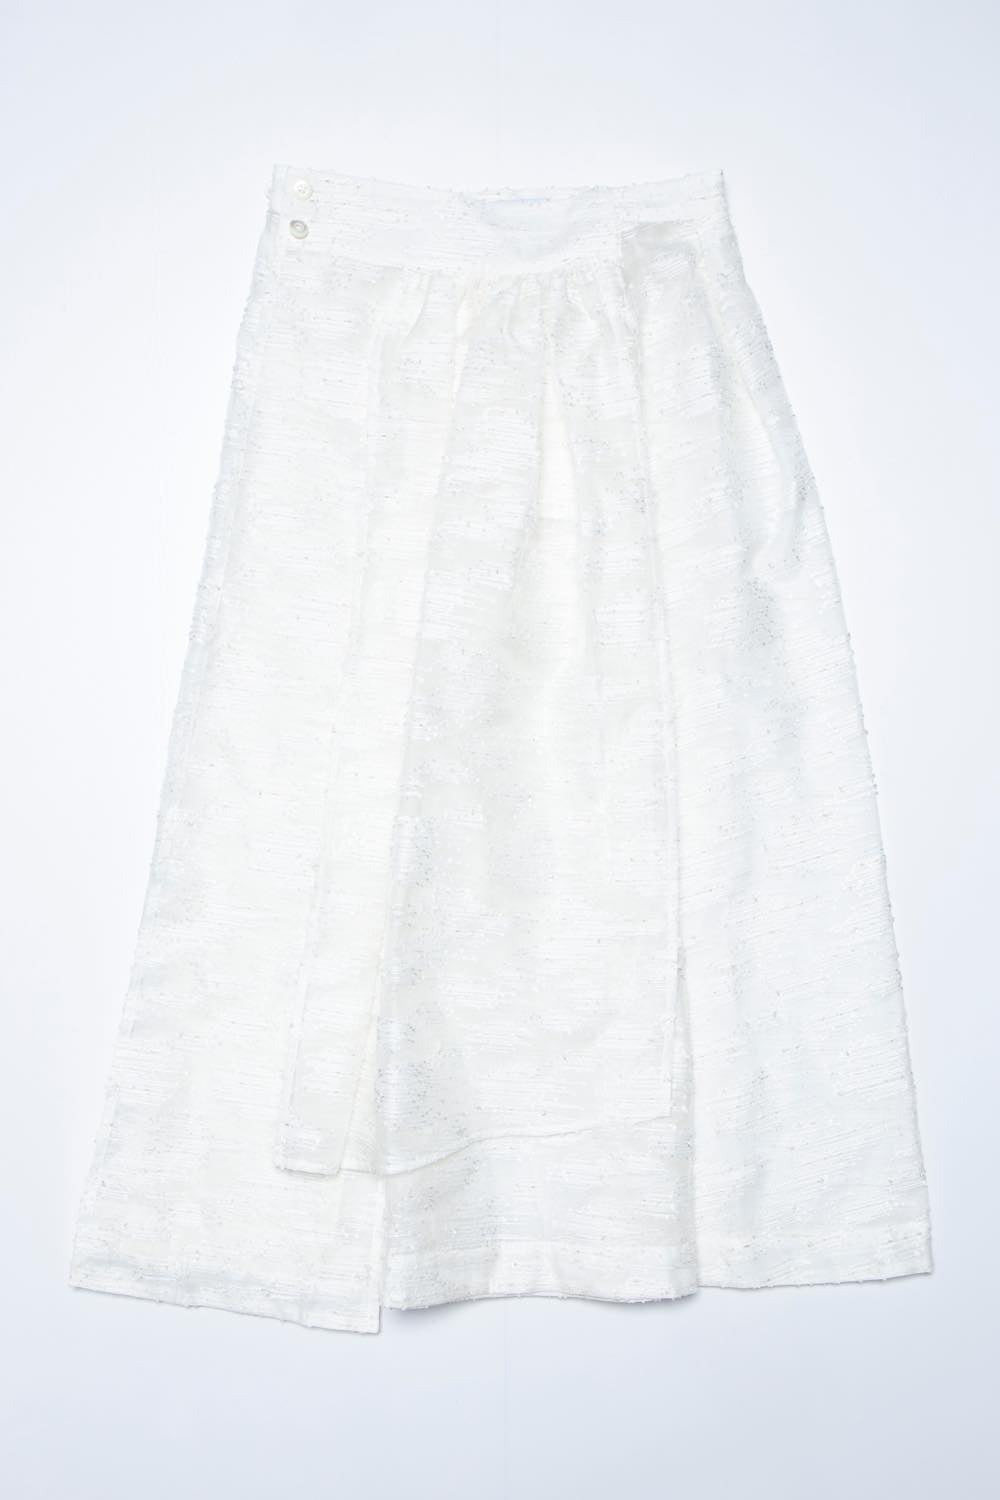 See Through Jacquard Wrap Skirt